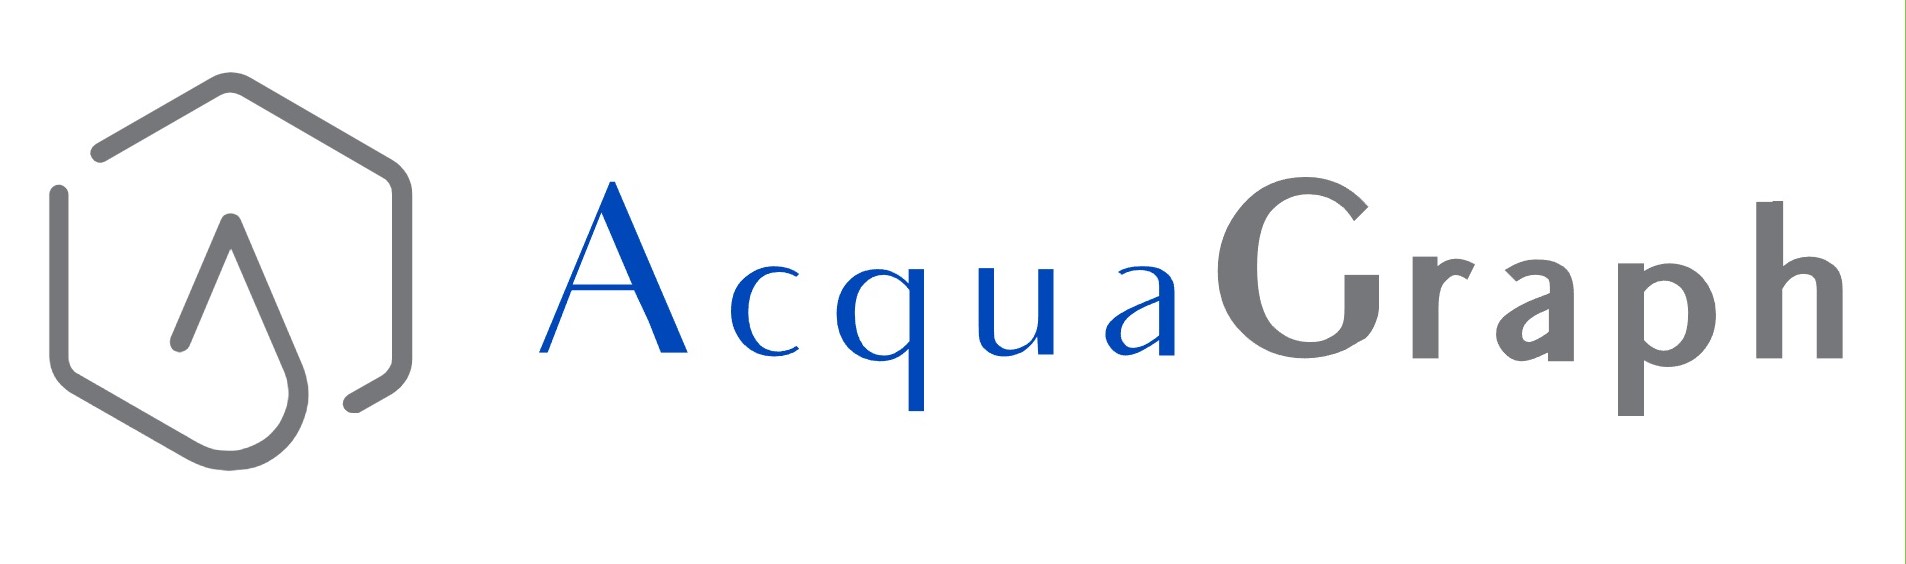 AcquaGraph-Header